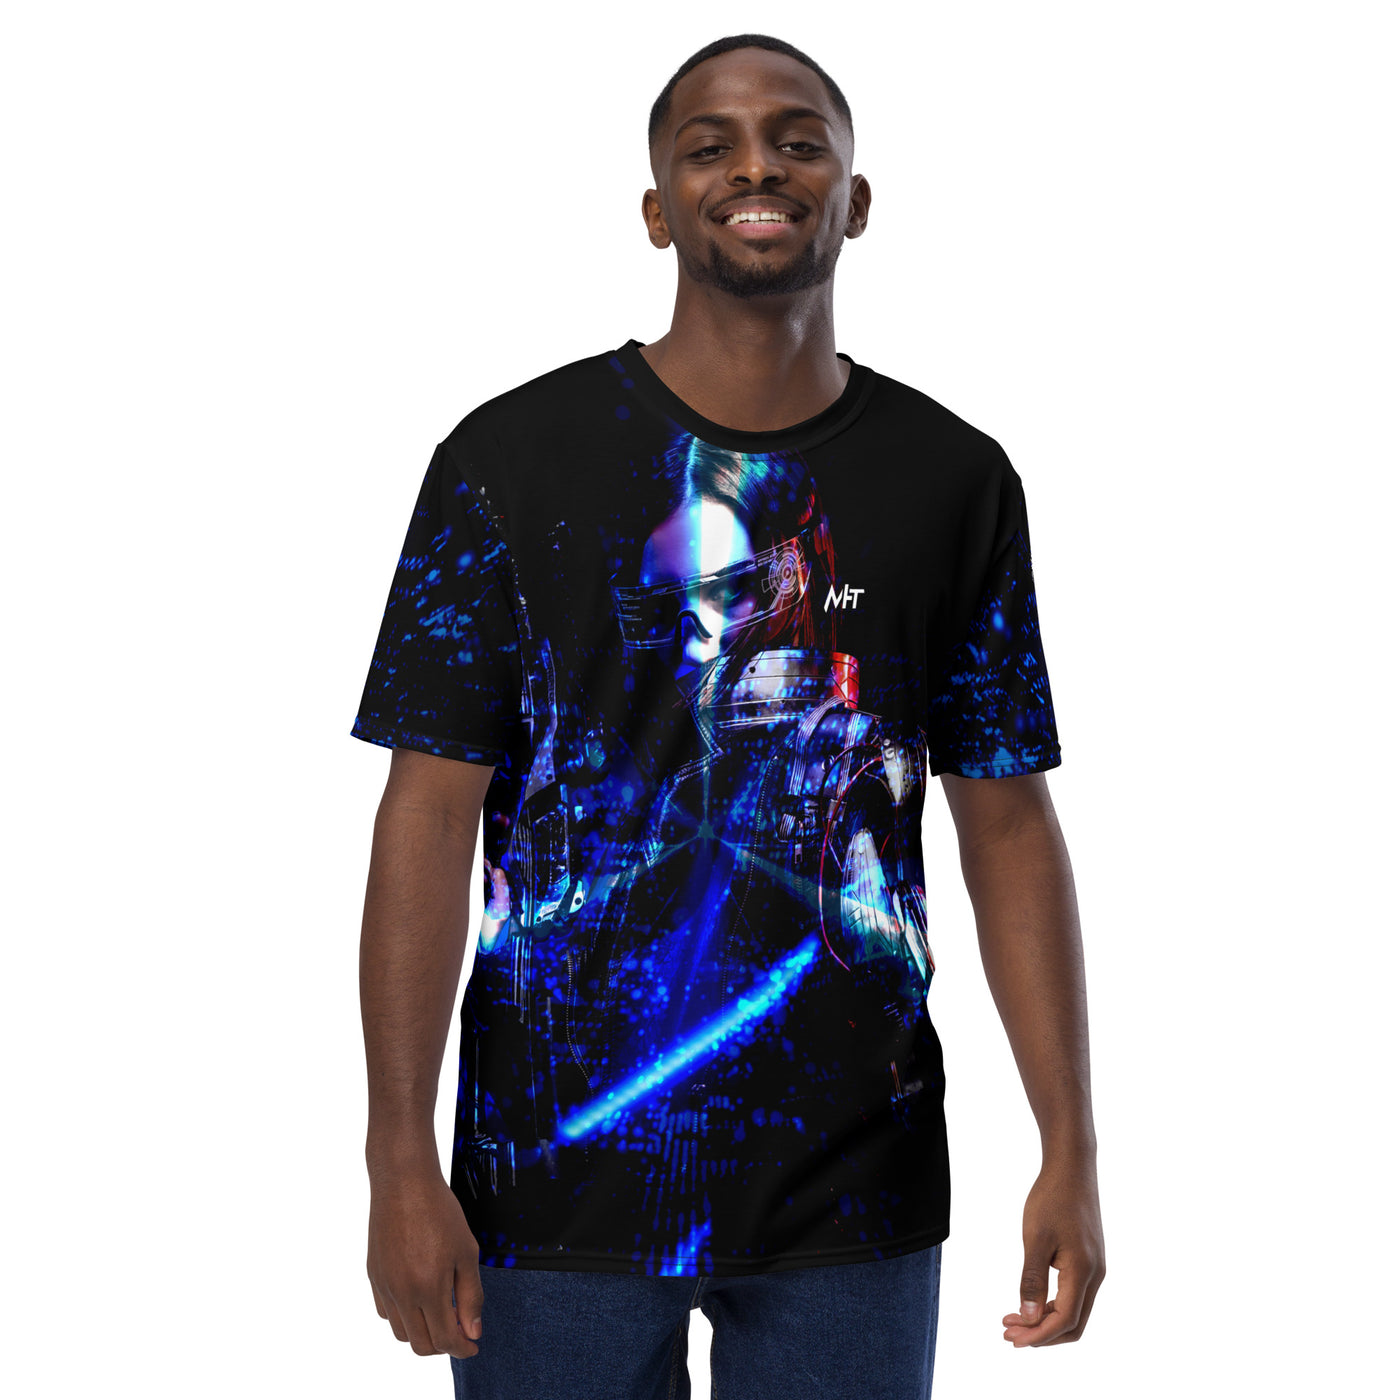 Cyberware Sentinel v1.0 - Men's t-shirt